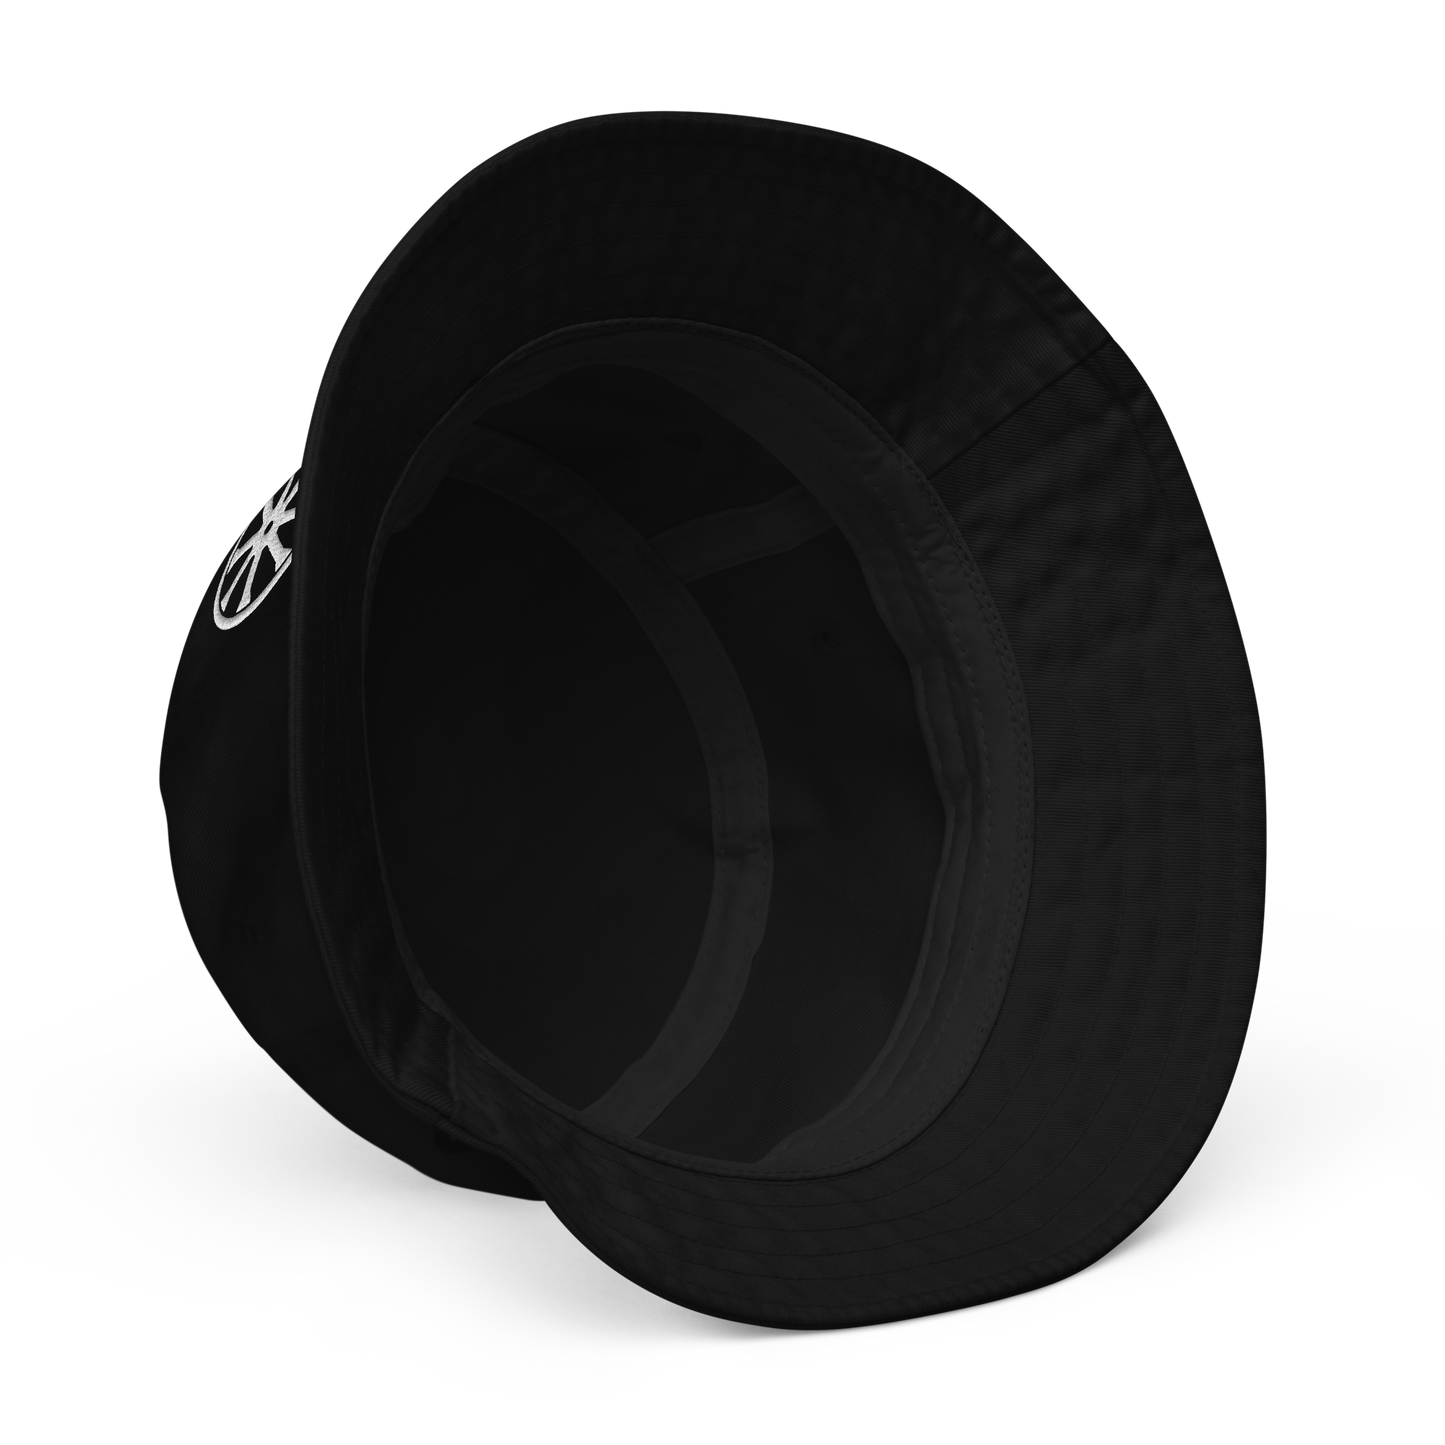 3rD Eye bucket hat - Black